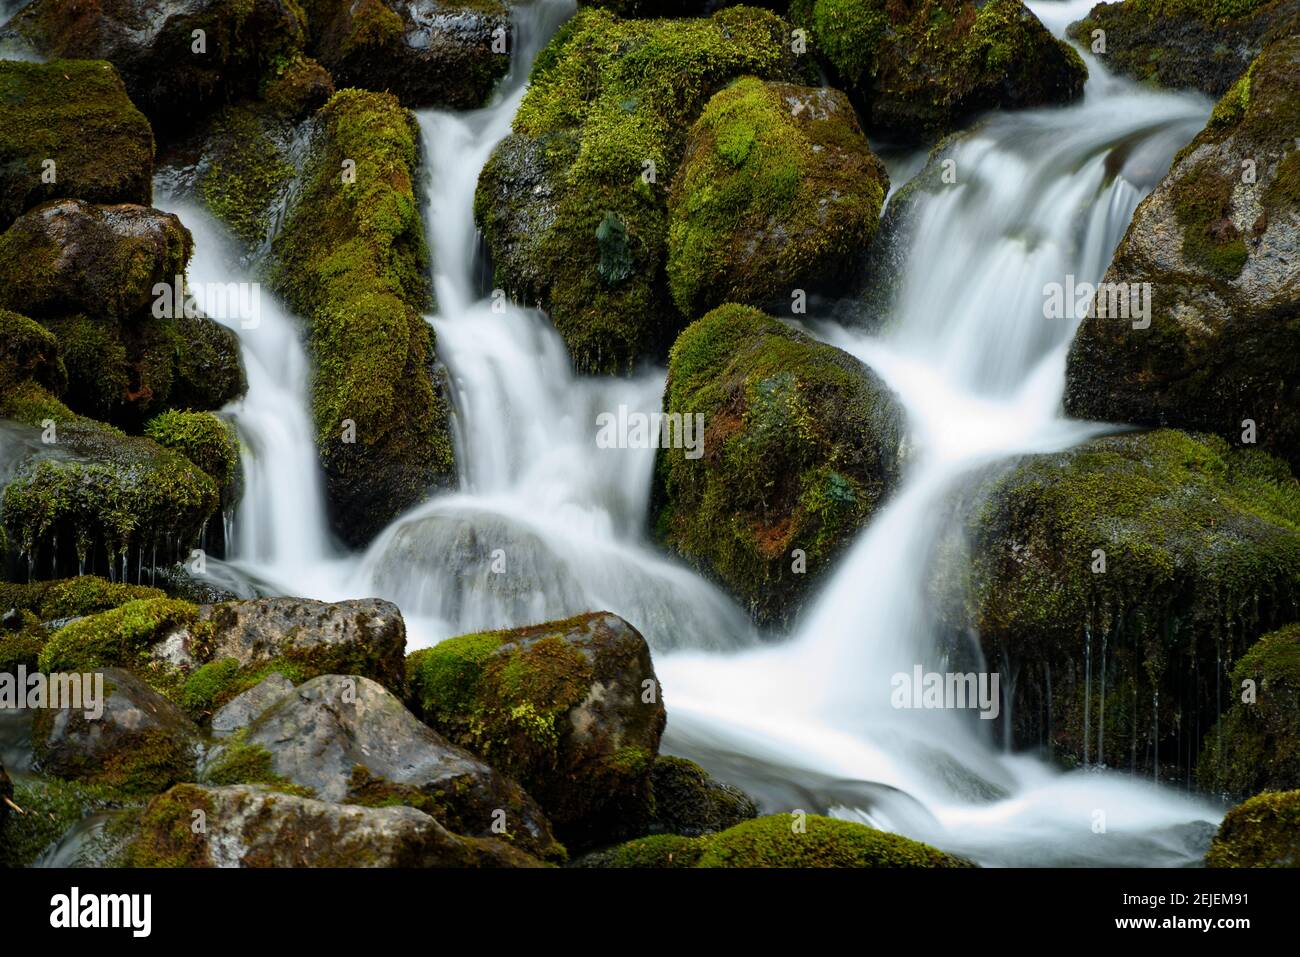 Uelhs deth Joèu waterfall in spring (Aran Valley, Catalonia, Pyrenees, Spain) ESP: Cascada de los Uelhs deth Joèu a la primavera (Valle de Arán) Stock Photo